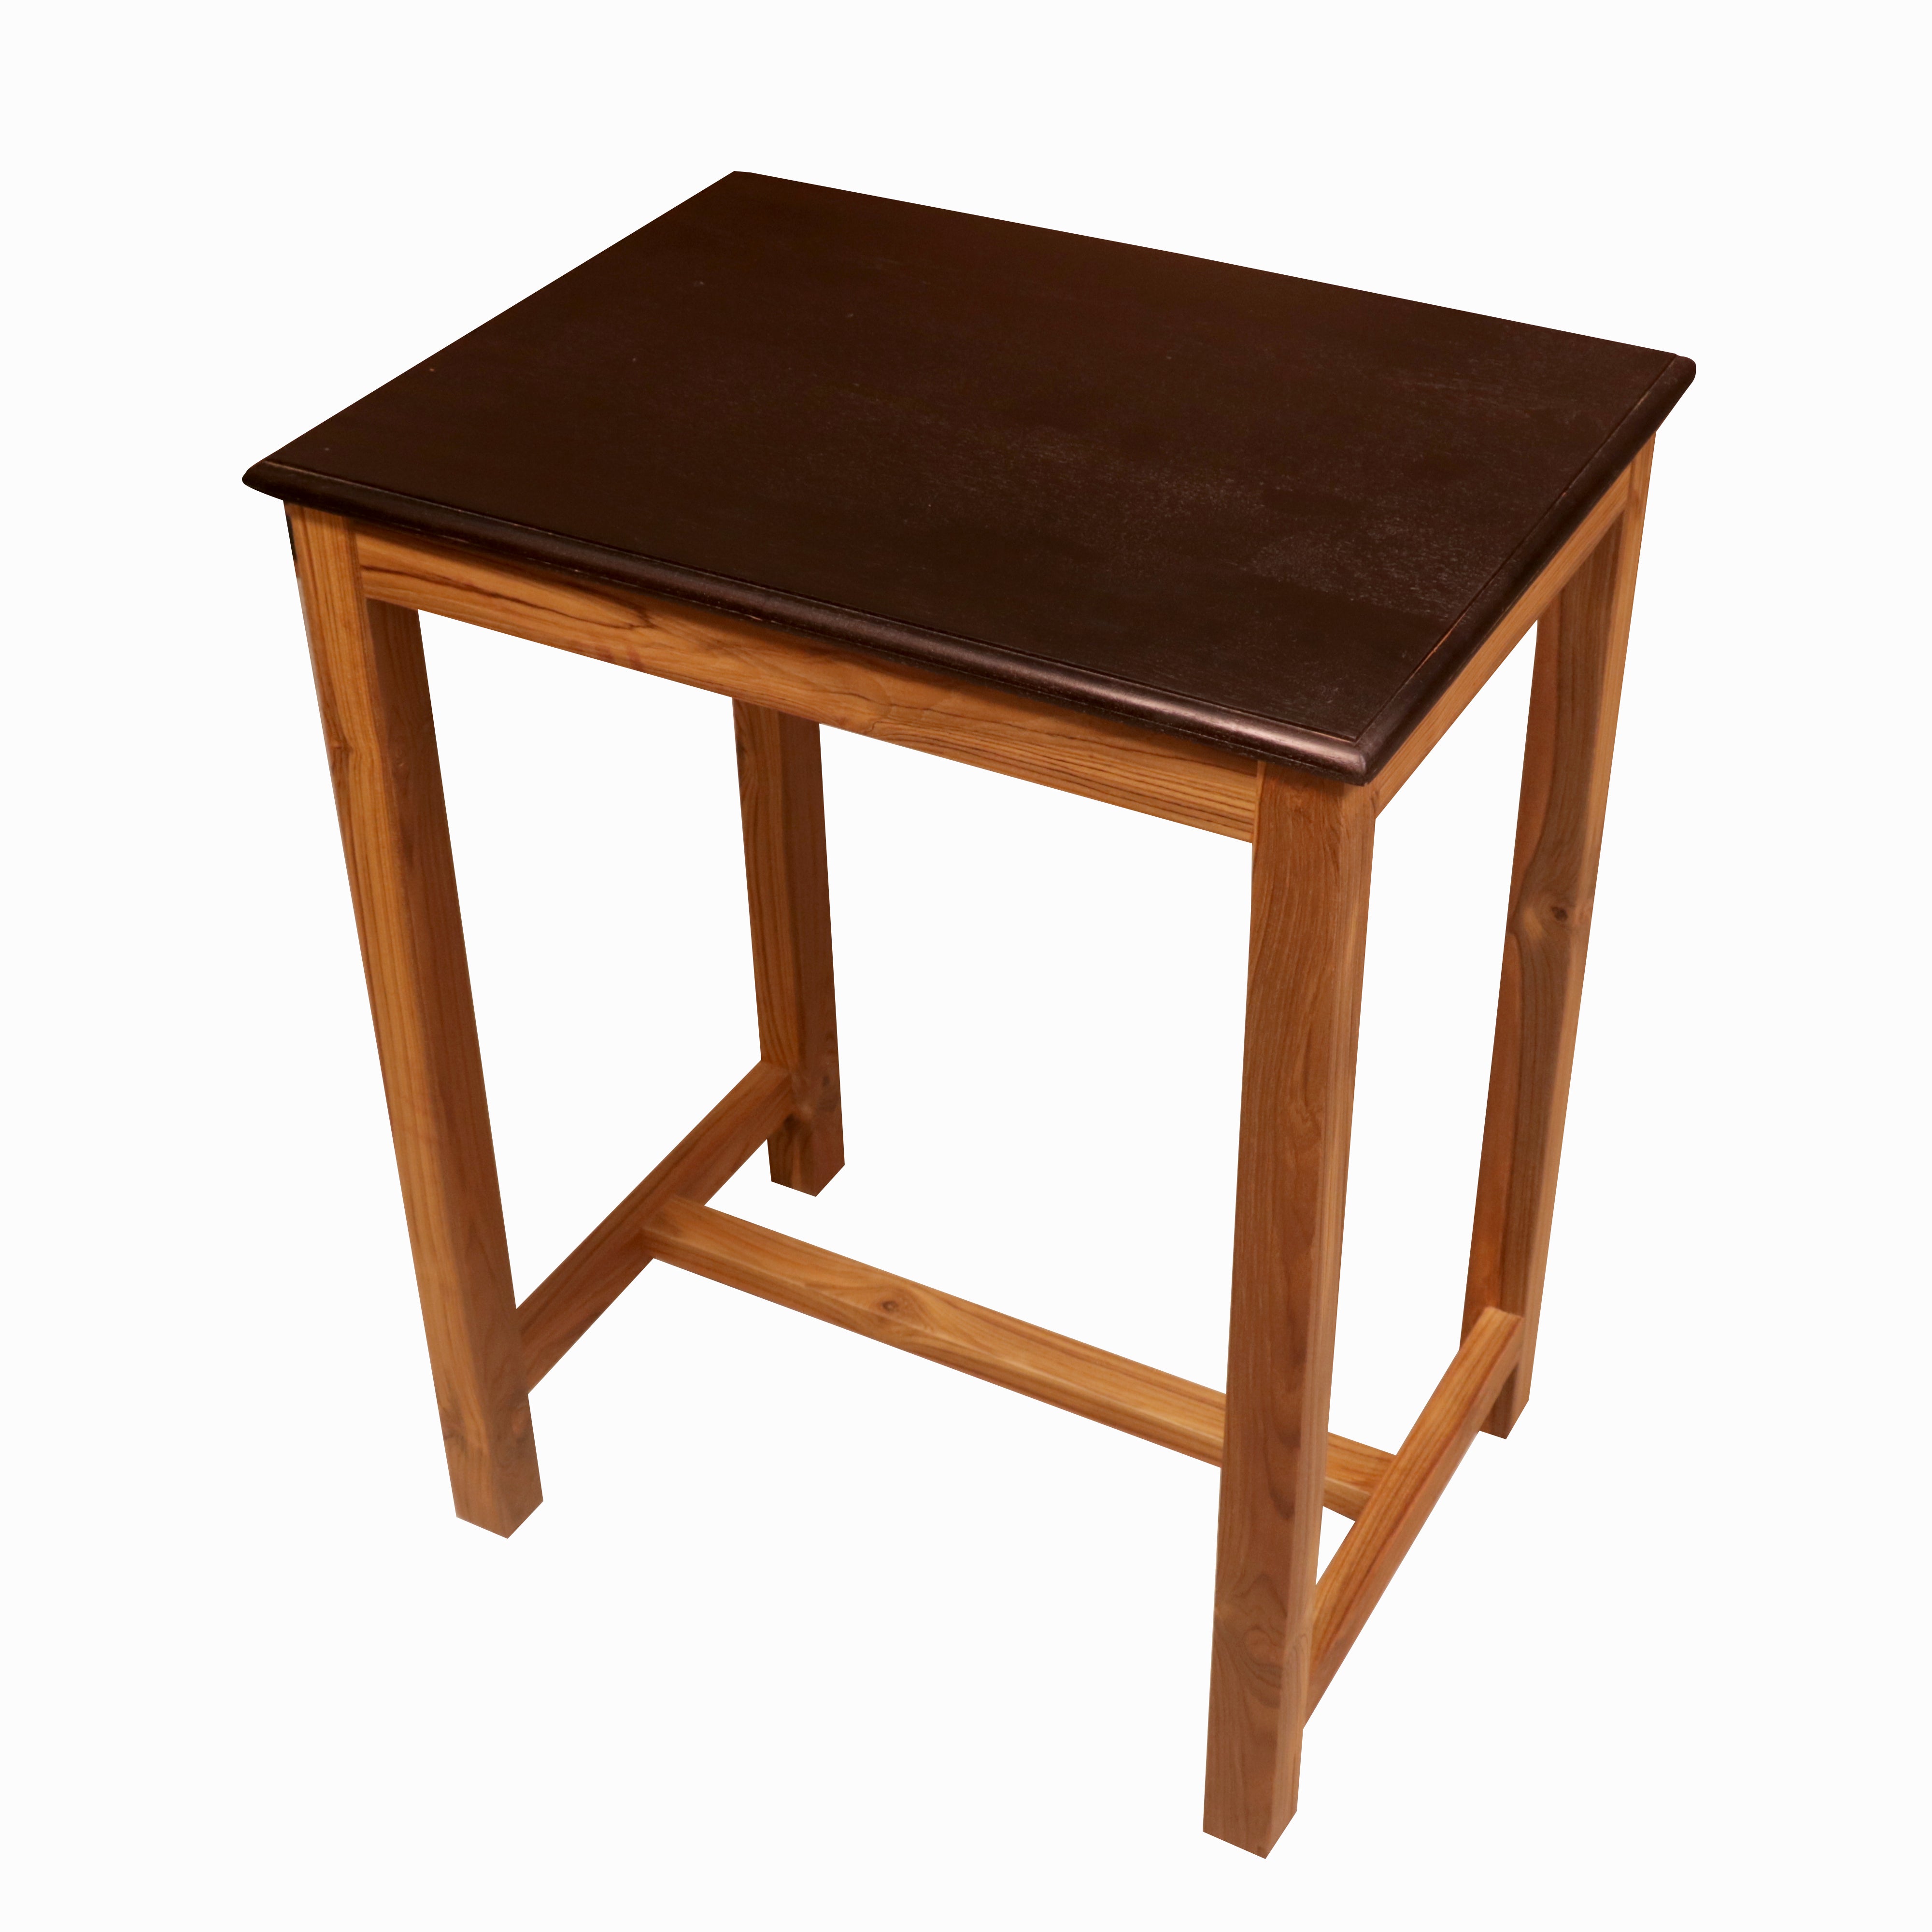 Tan and Dark Table Dual Tone Teak Wood Dining Table